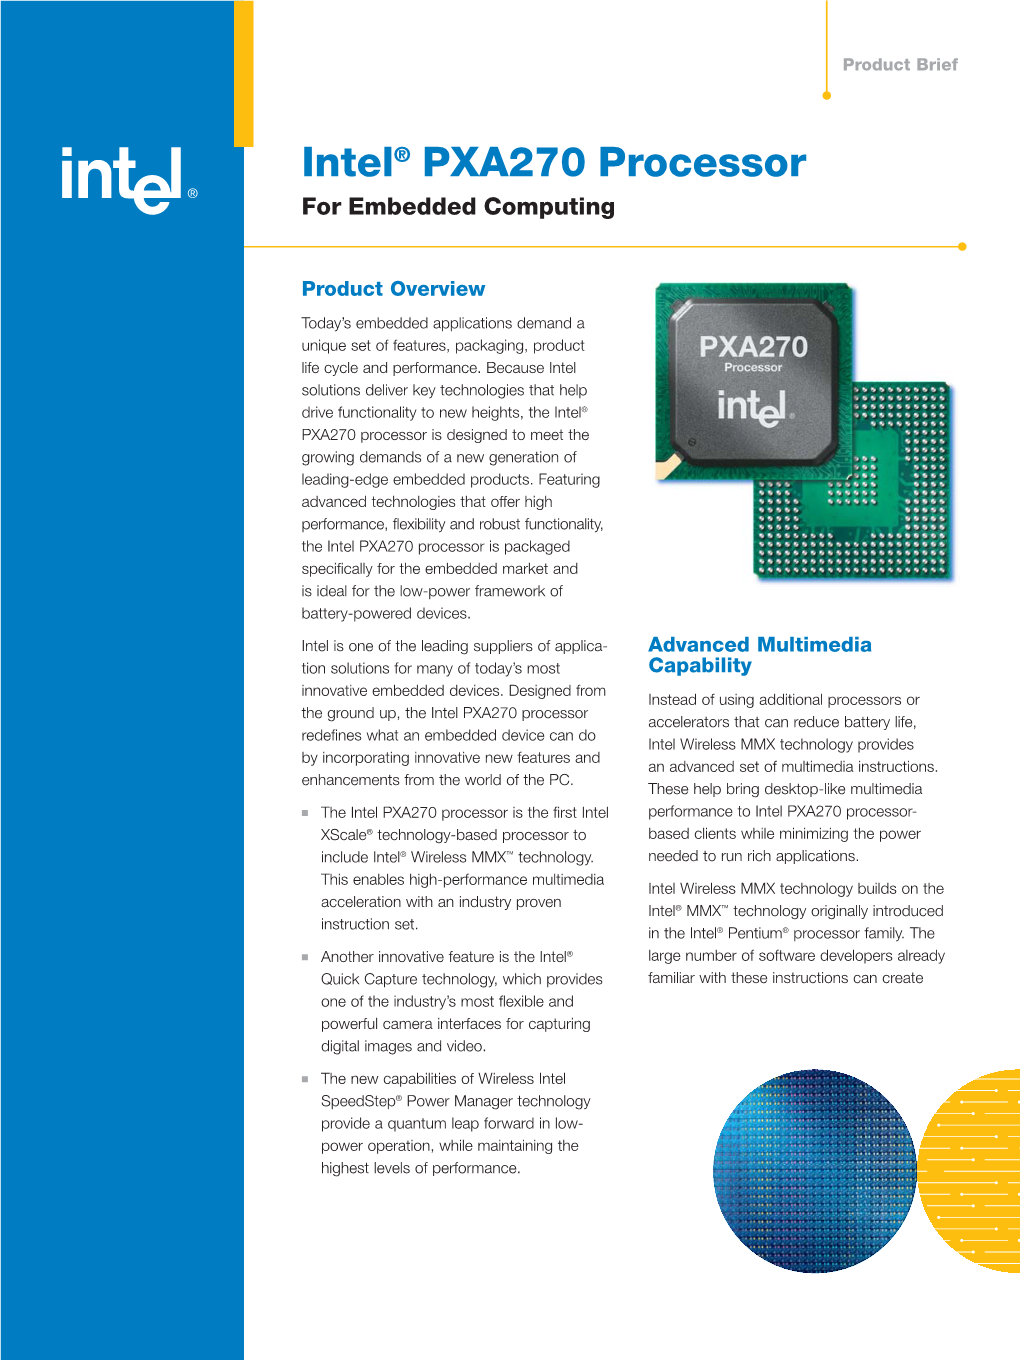 Intel® PXA270 Processor for Embedded Computing